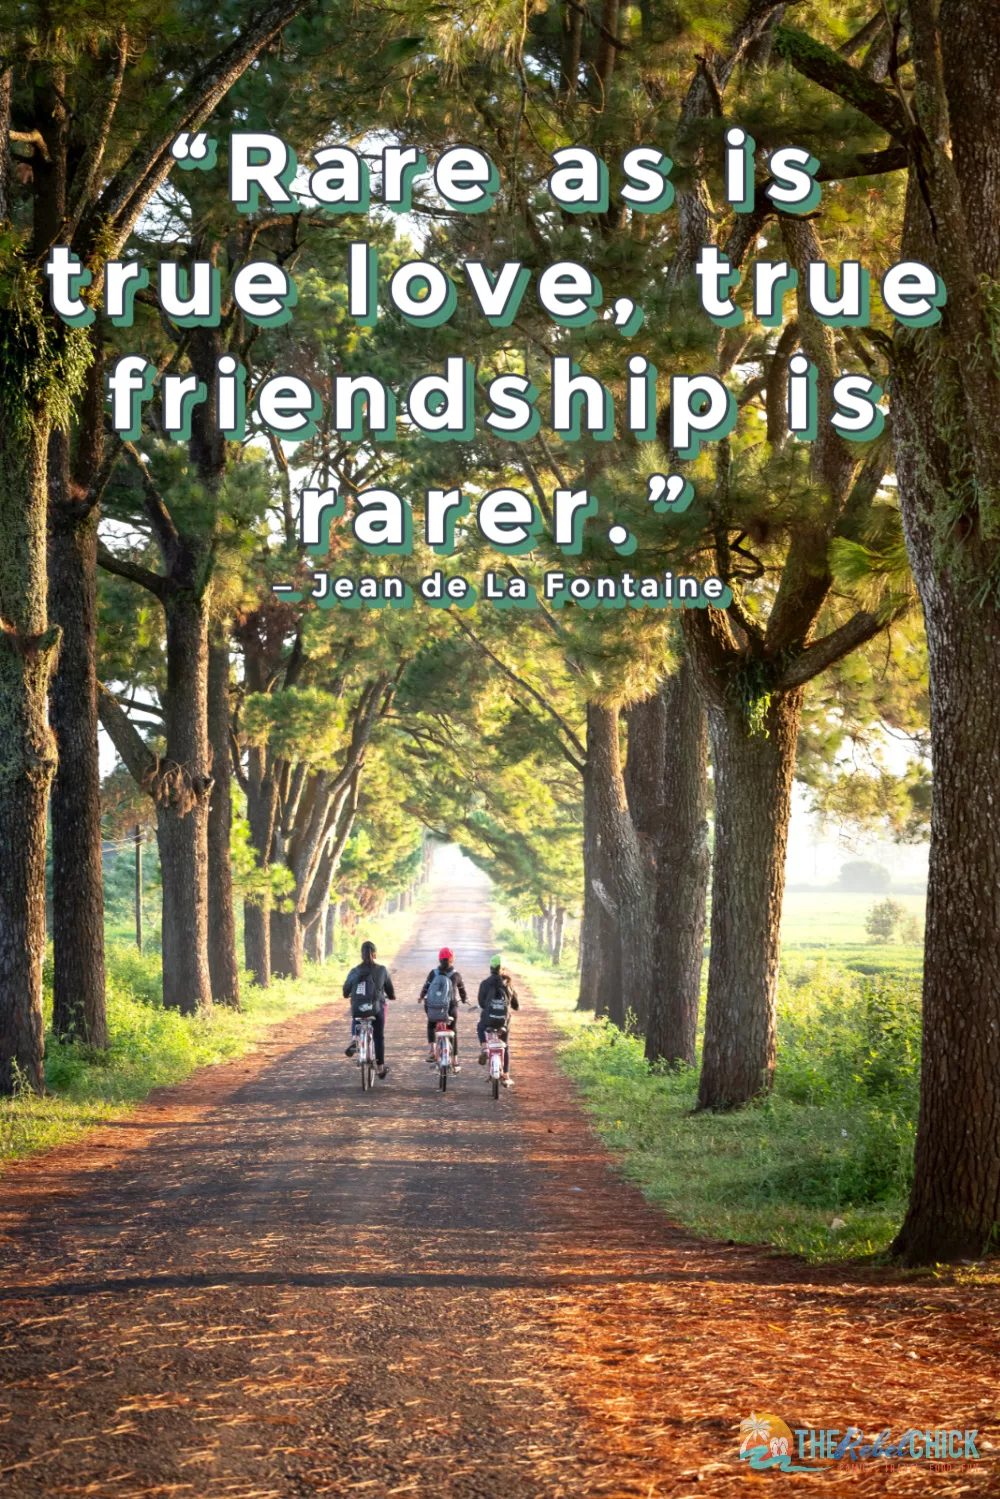 “Rare as is true love, true friendship is rarer.” — Jean de La Fontaine